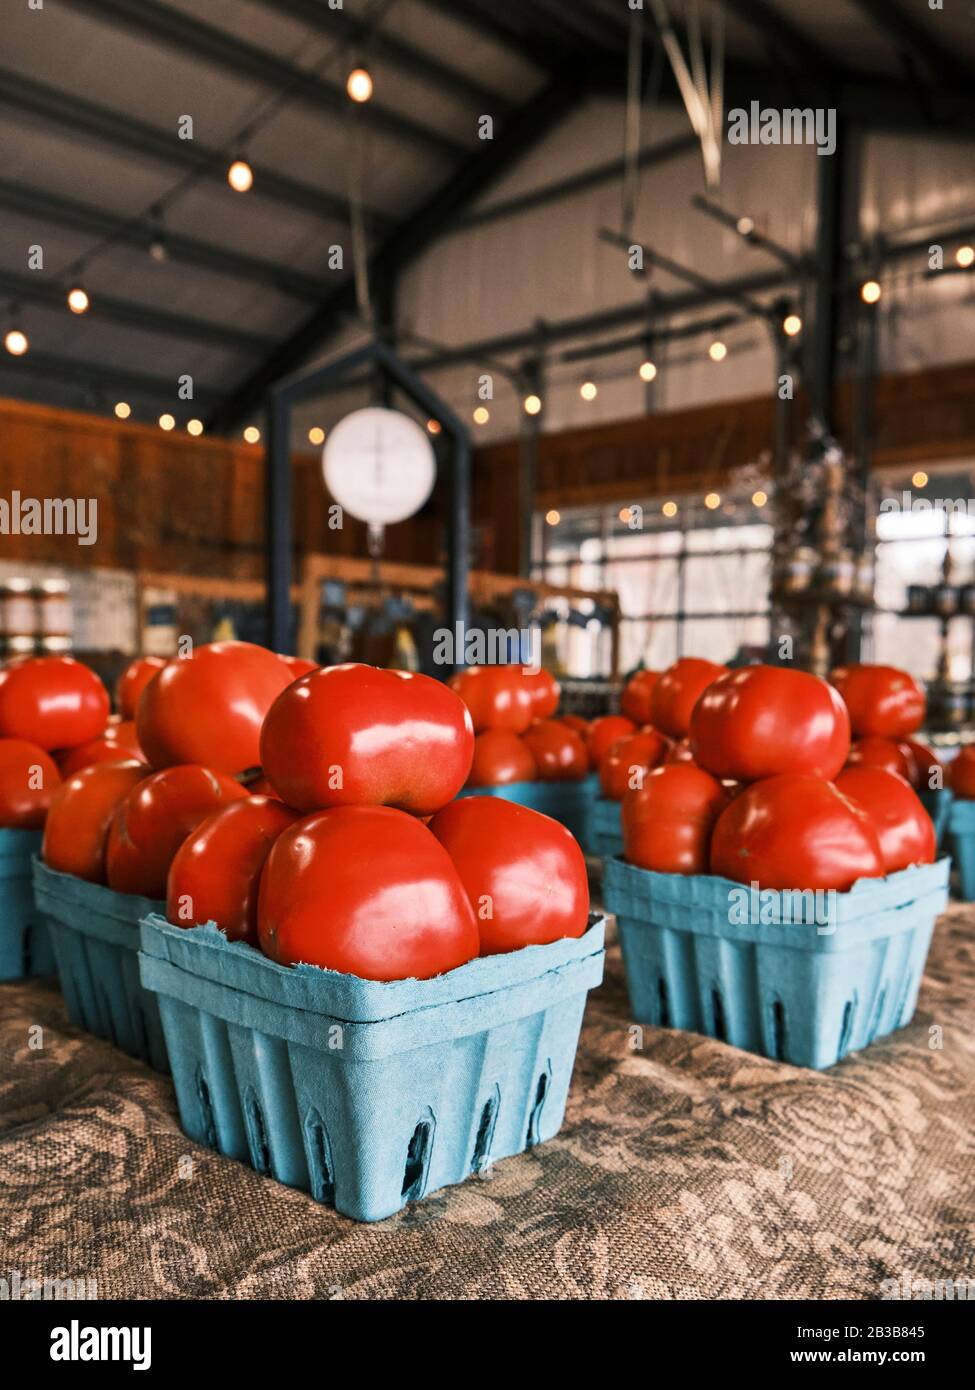 Farm fresh beefsteak tomatoes on display for sale in a rural Alabama farmer's market or roadside market in Pike Road Alabama, USA. Stock Photo